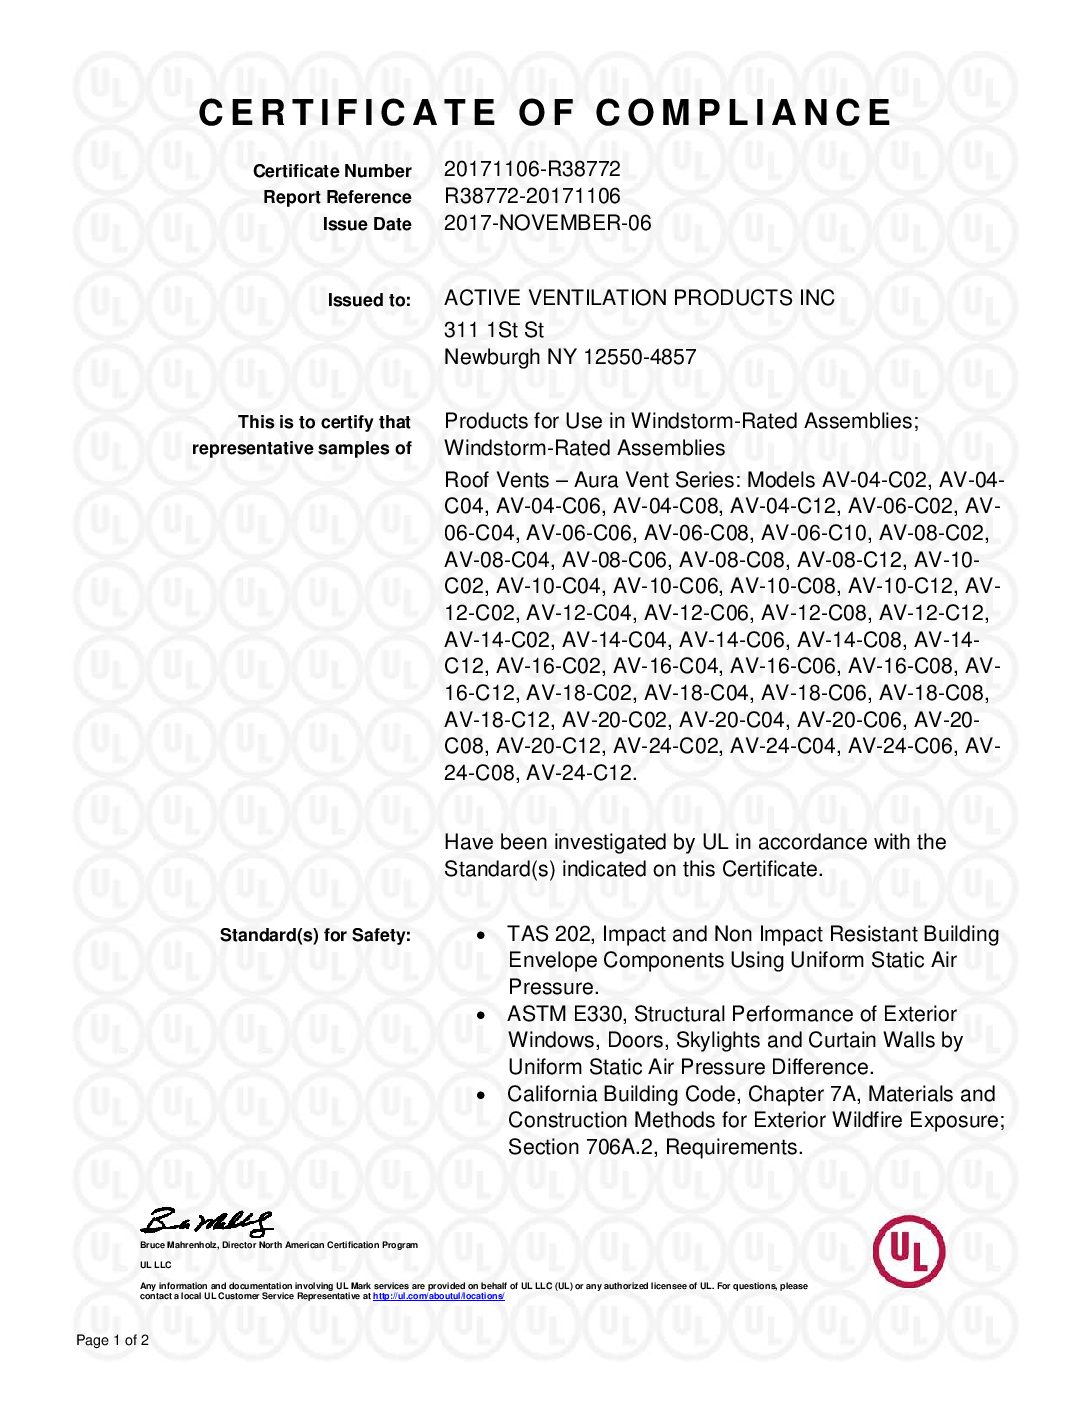 UL Certificate of Compliance Active Ventilation Aura Vents